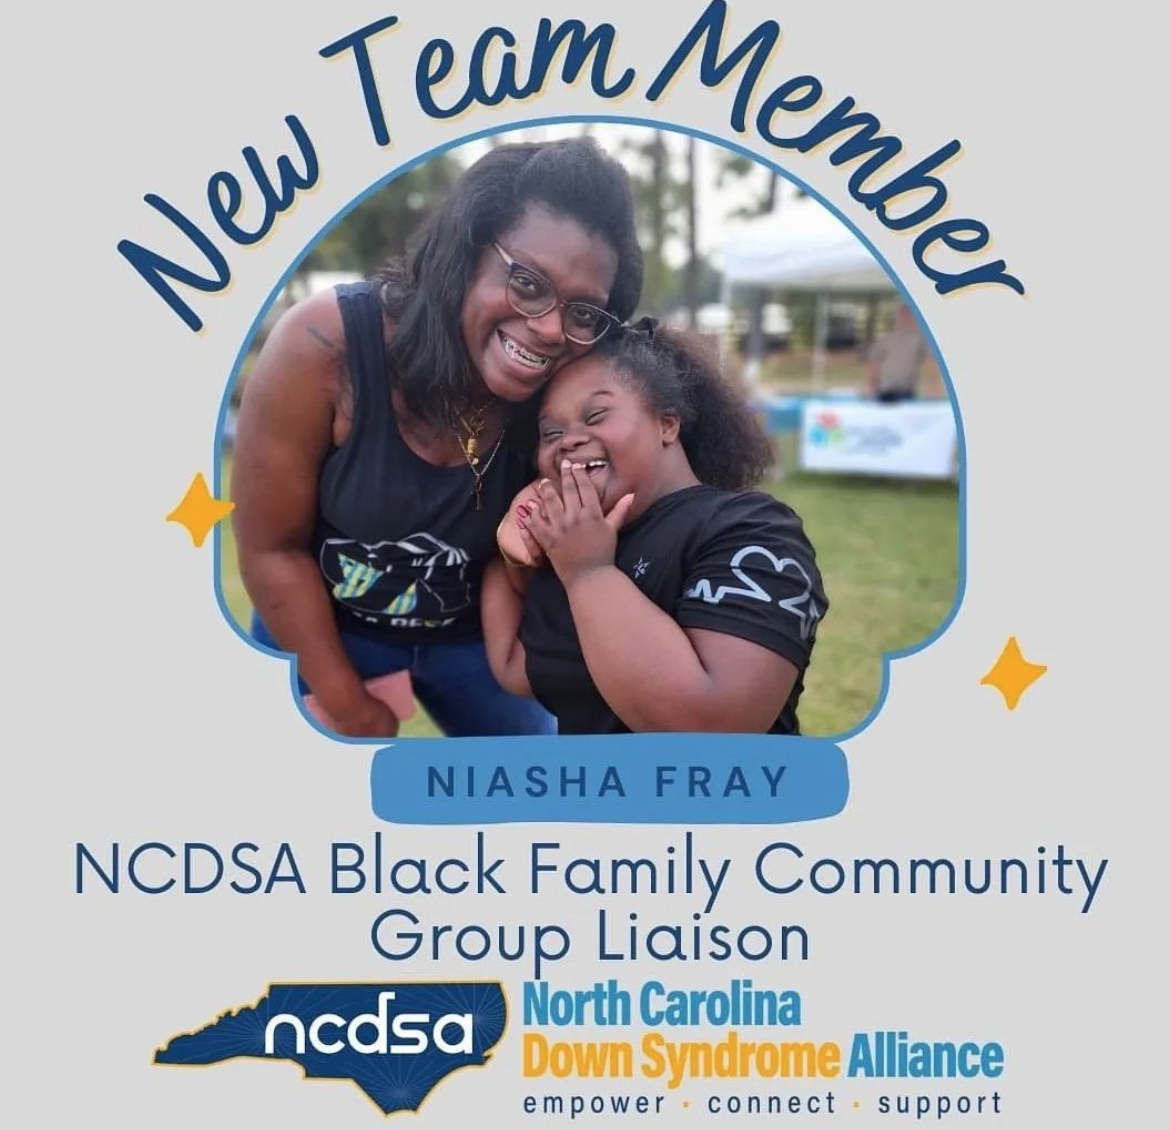 North Carolina Down Syndrome Alliance